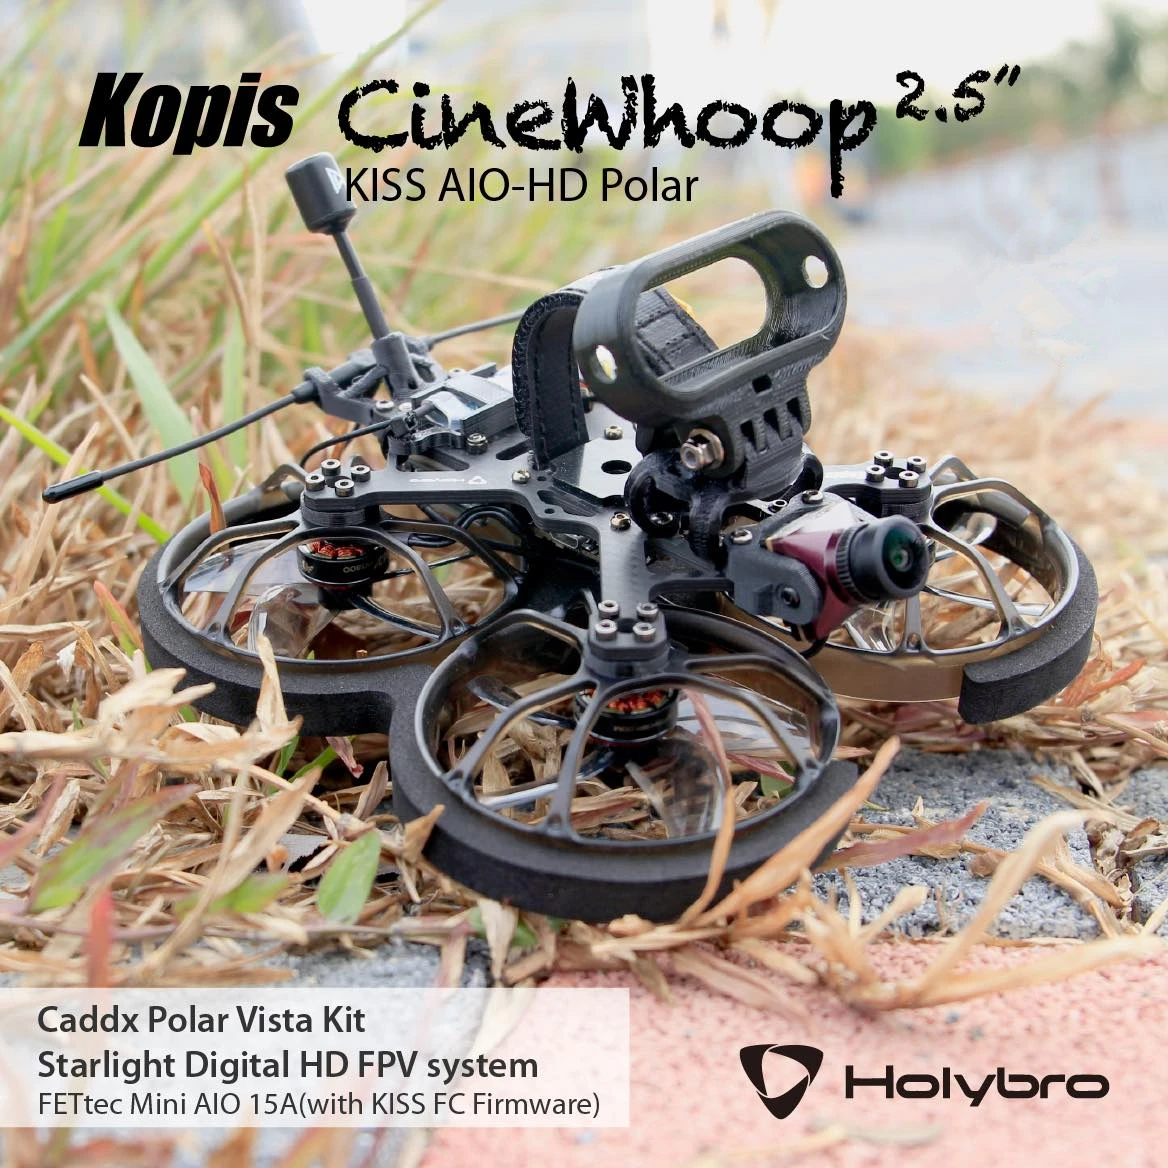 

Holybro Kopis Cinewhoop2.5" KISS AIO-HD Polar Holybro-FETtec Mini AIO 15A Caddx Polar Vista Kit Digital System F1404 KV3800 4S